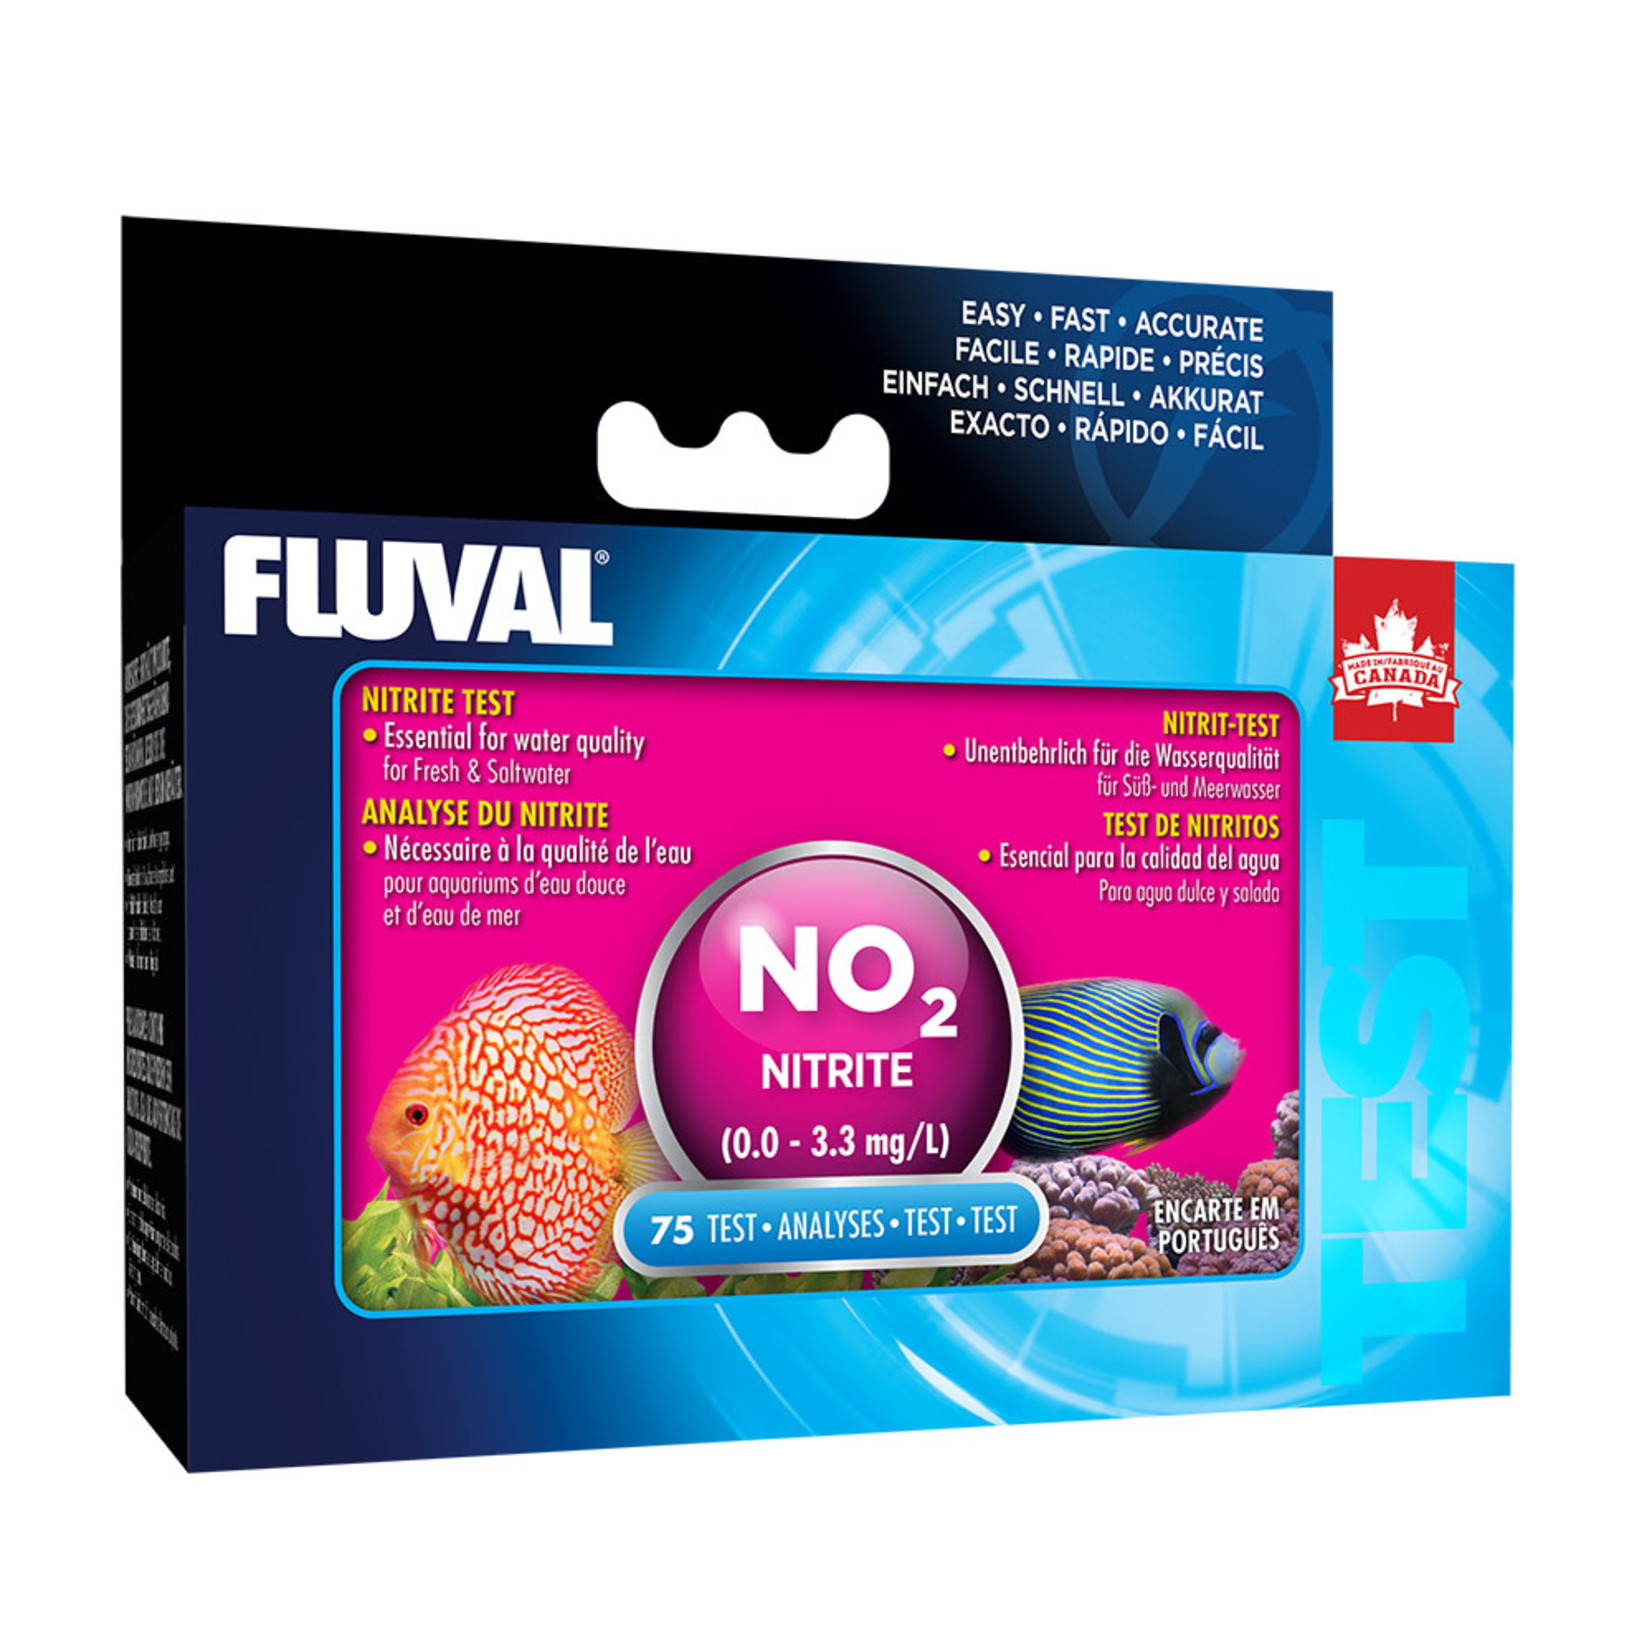 Fluval Nitrite (0.0-3.3 mg/l) for Fresh & Saltwater, 75 tests